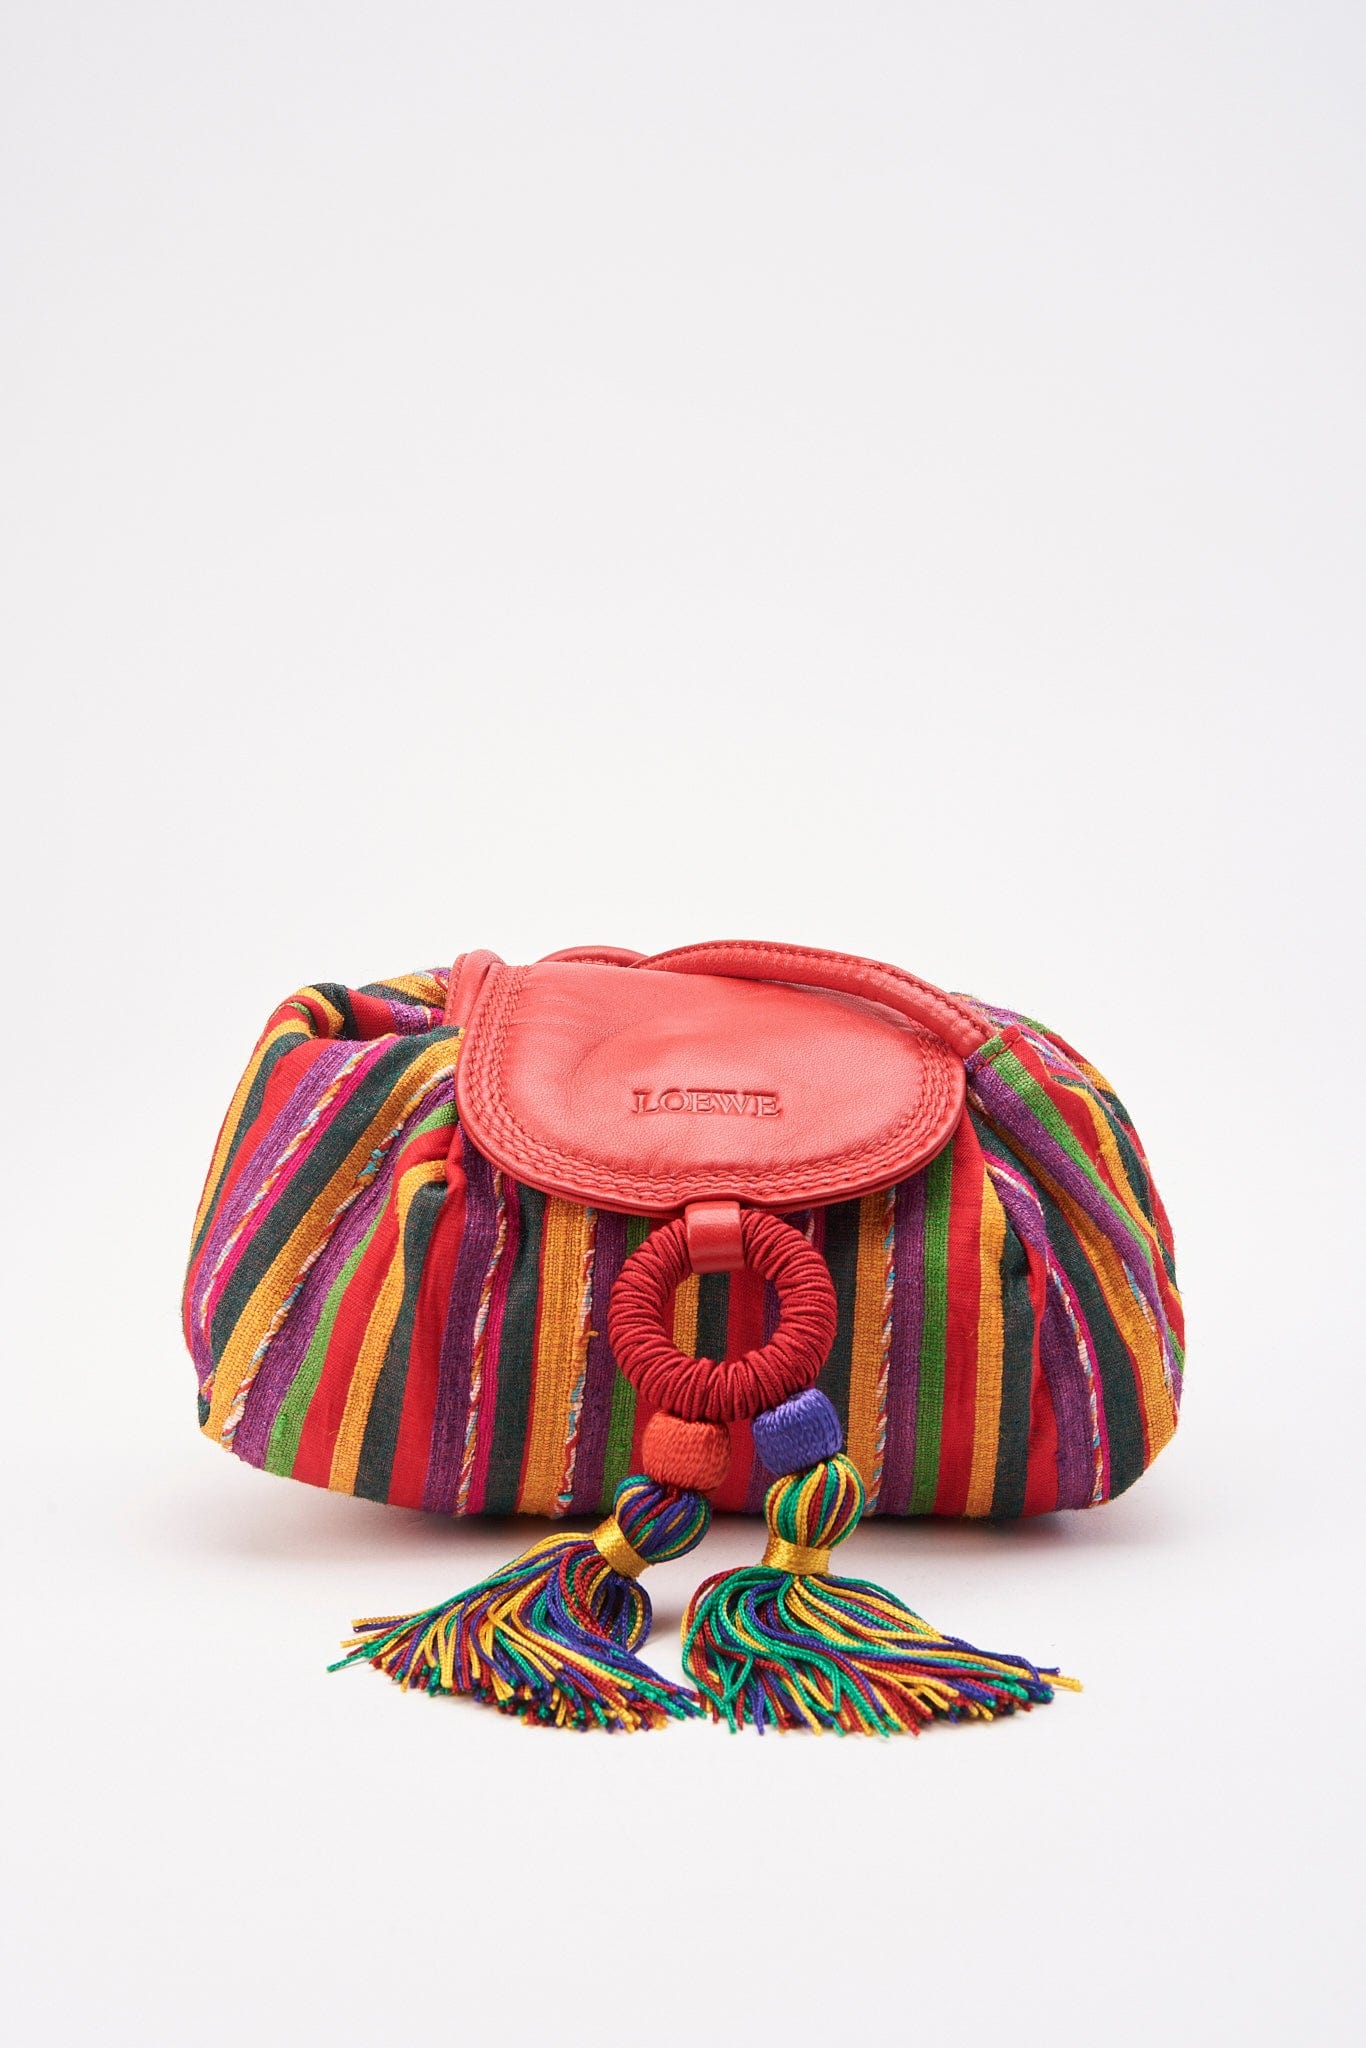 Vintage Loewe Multicolour Fabric Striped Bag With Tassel